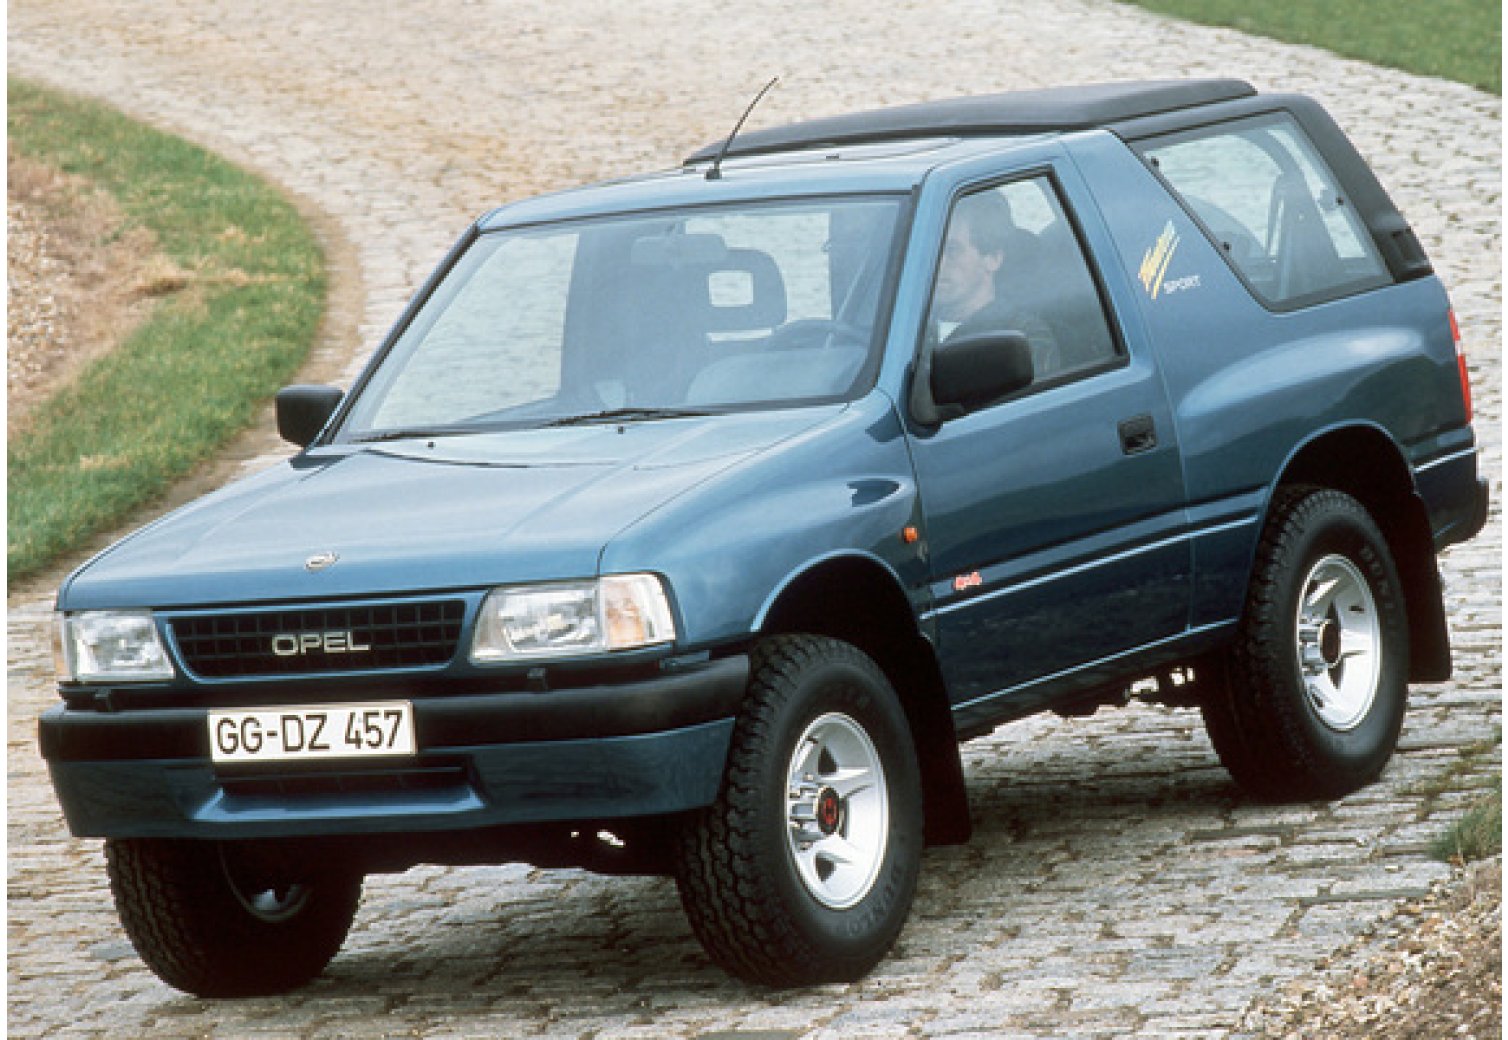 Fußmatten Alu Riffelblech für Opel Frontera A 3-Türer 1991-1998 